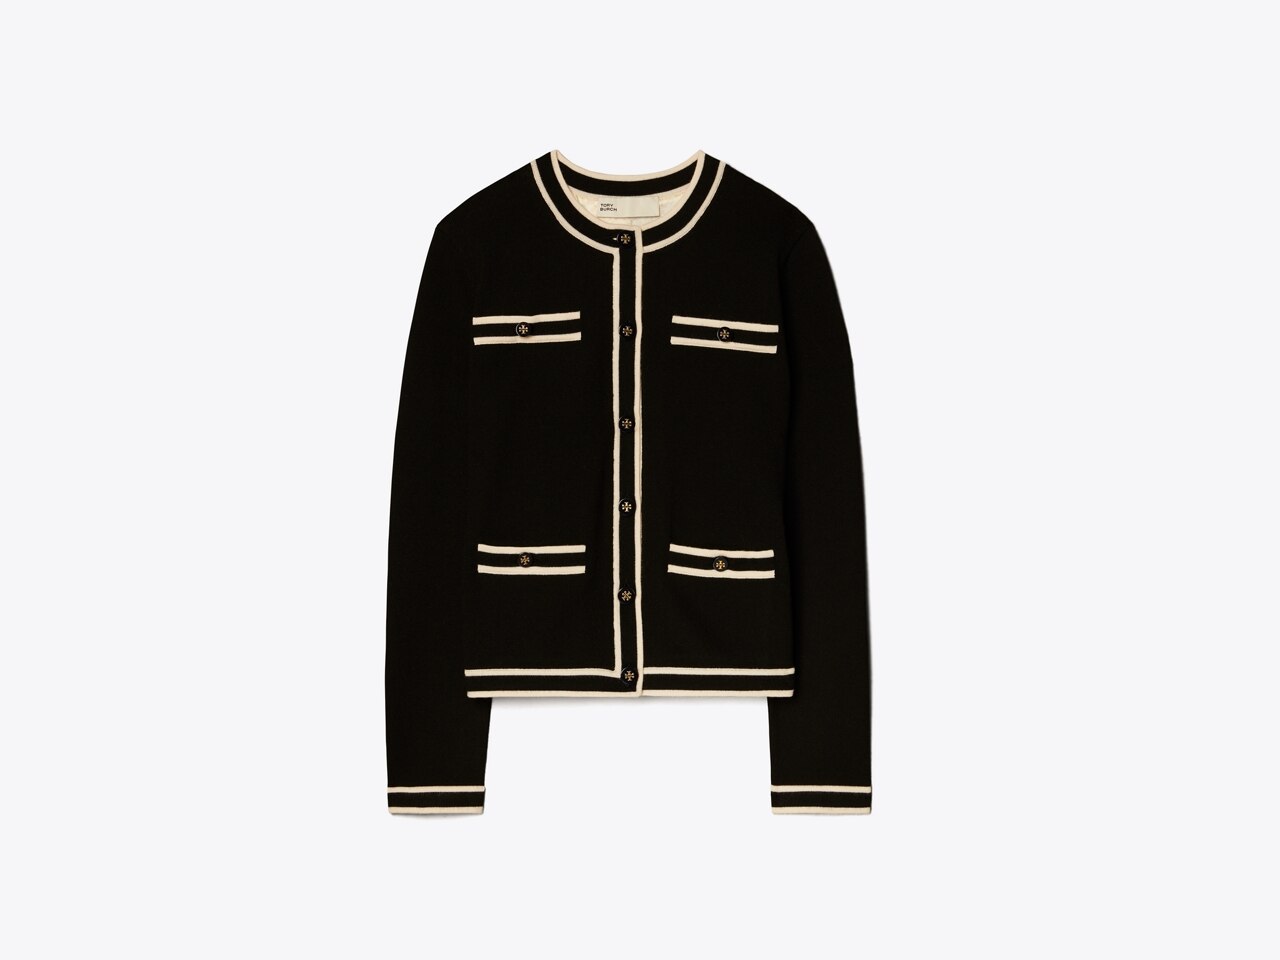 Tory Burch - Black Cardigan Sweater - Black, Cream - Small - Top